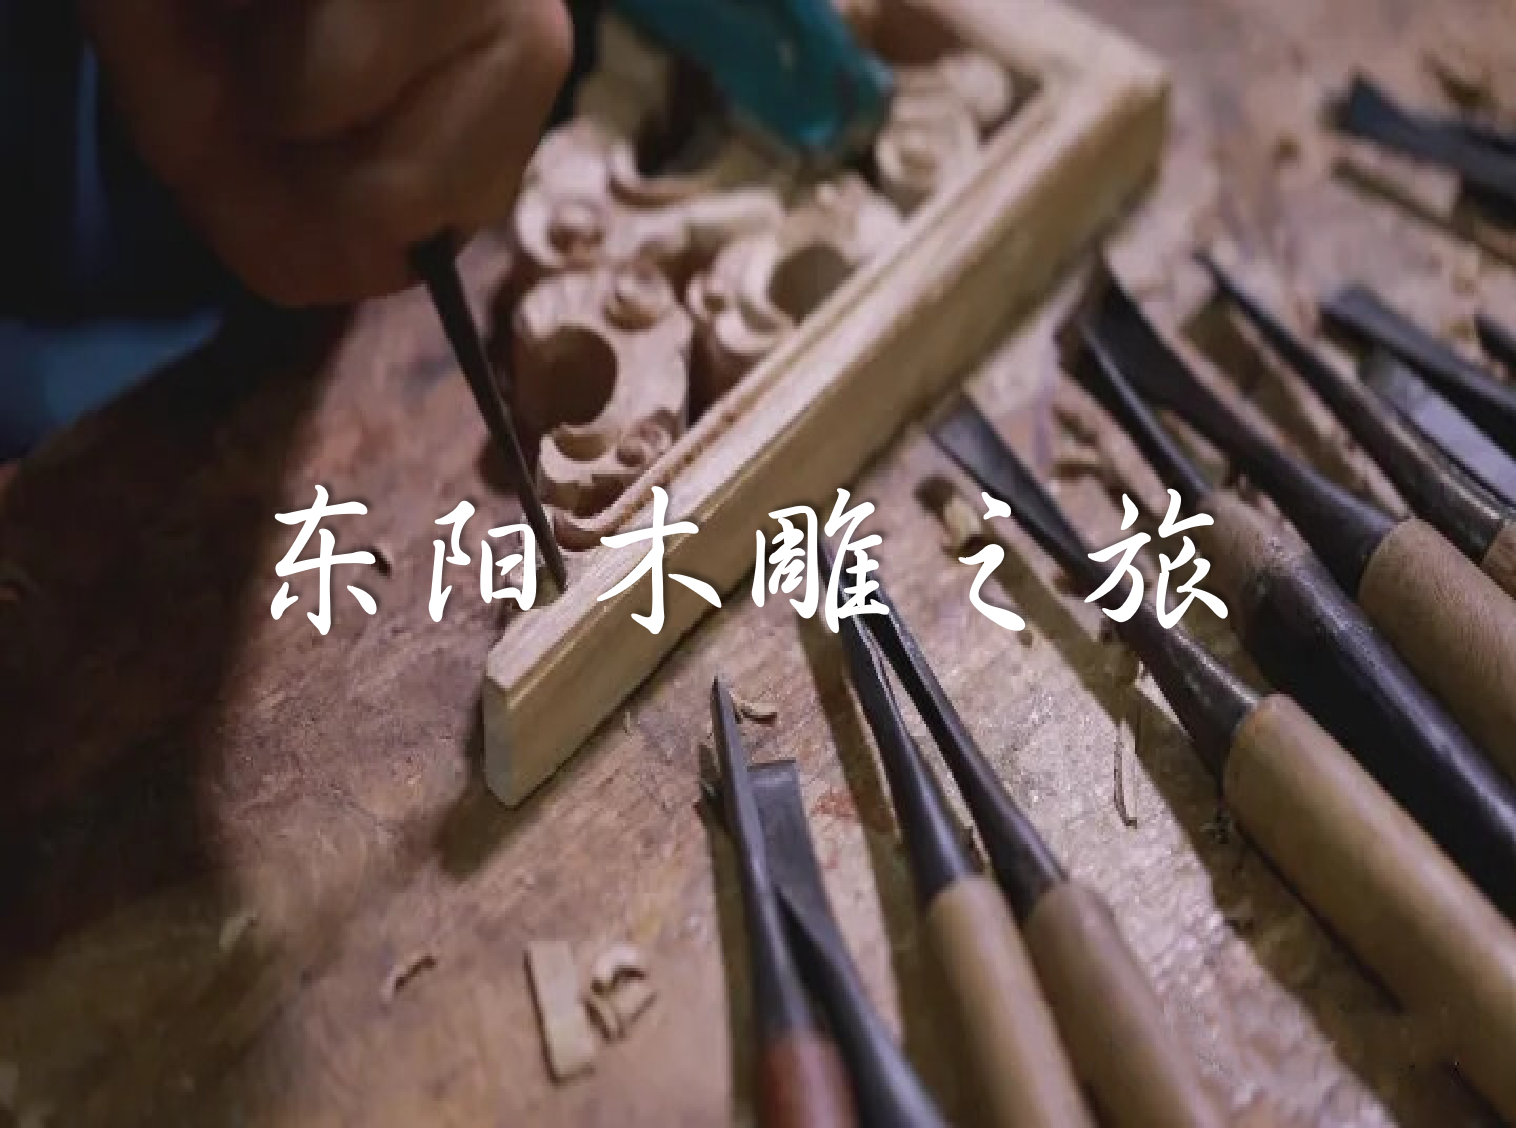 Dongyang Wood Carving Tour